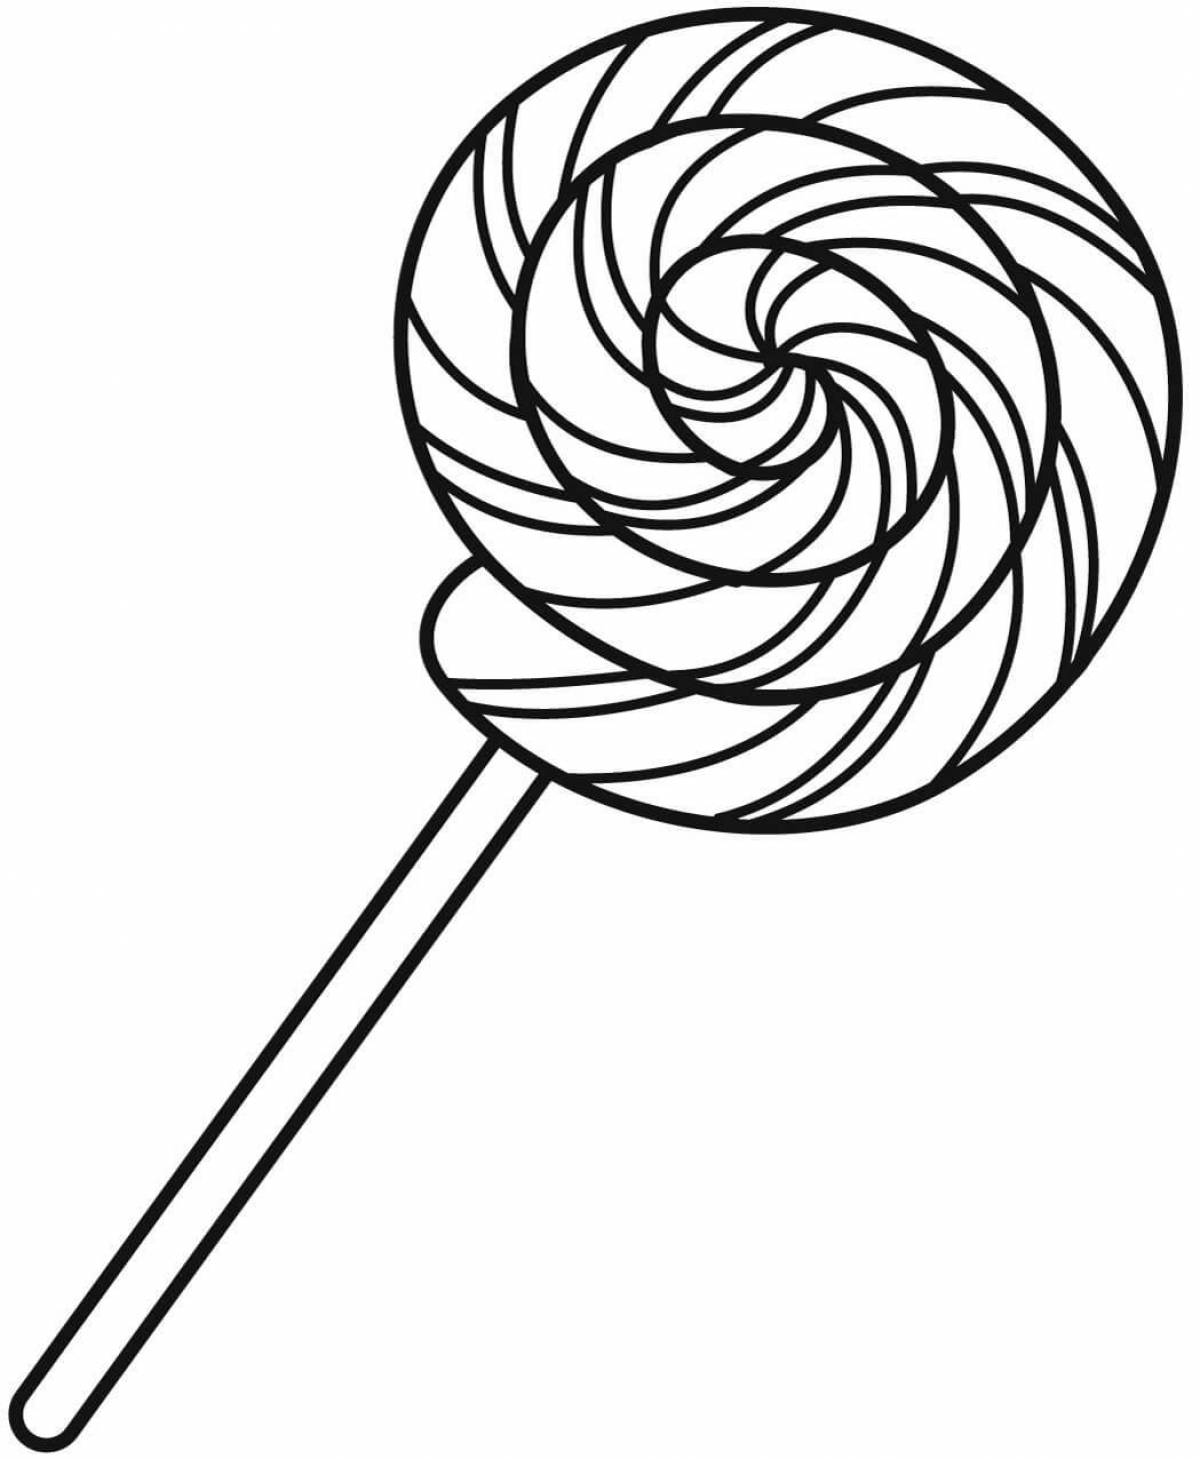 Rampant lollipop coloring page